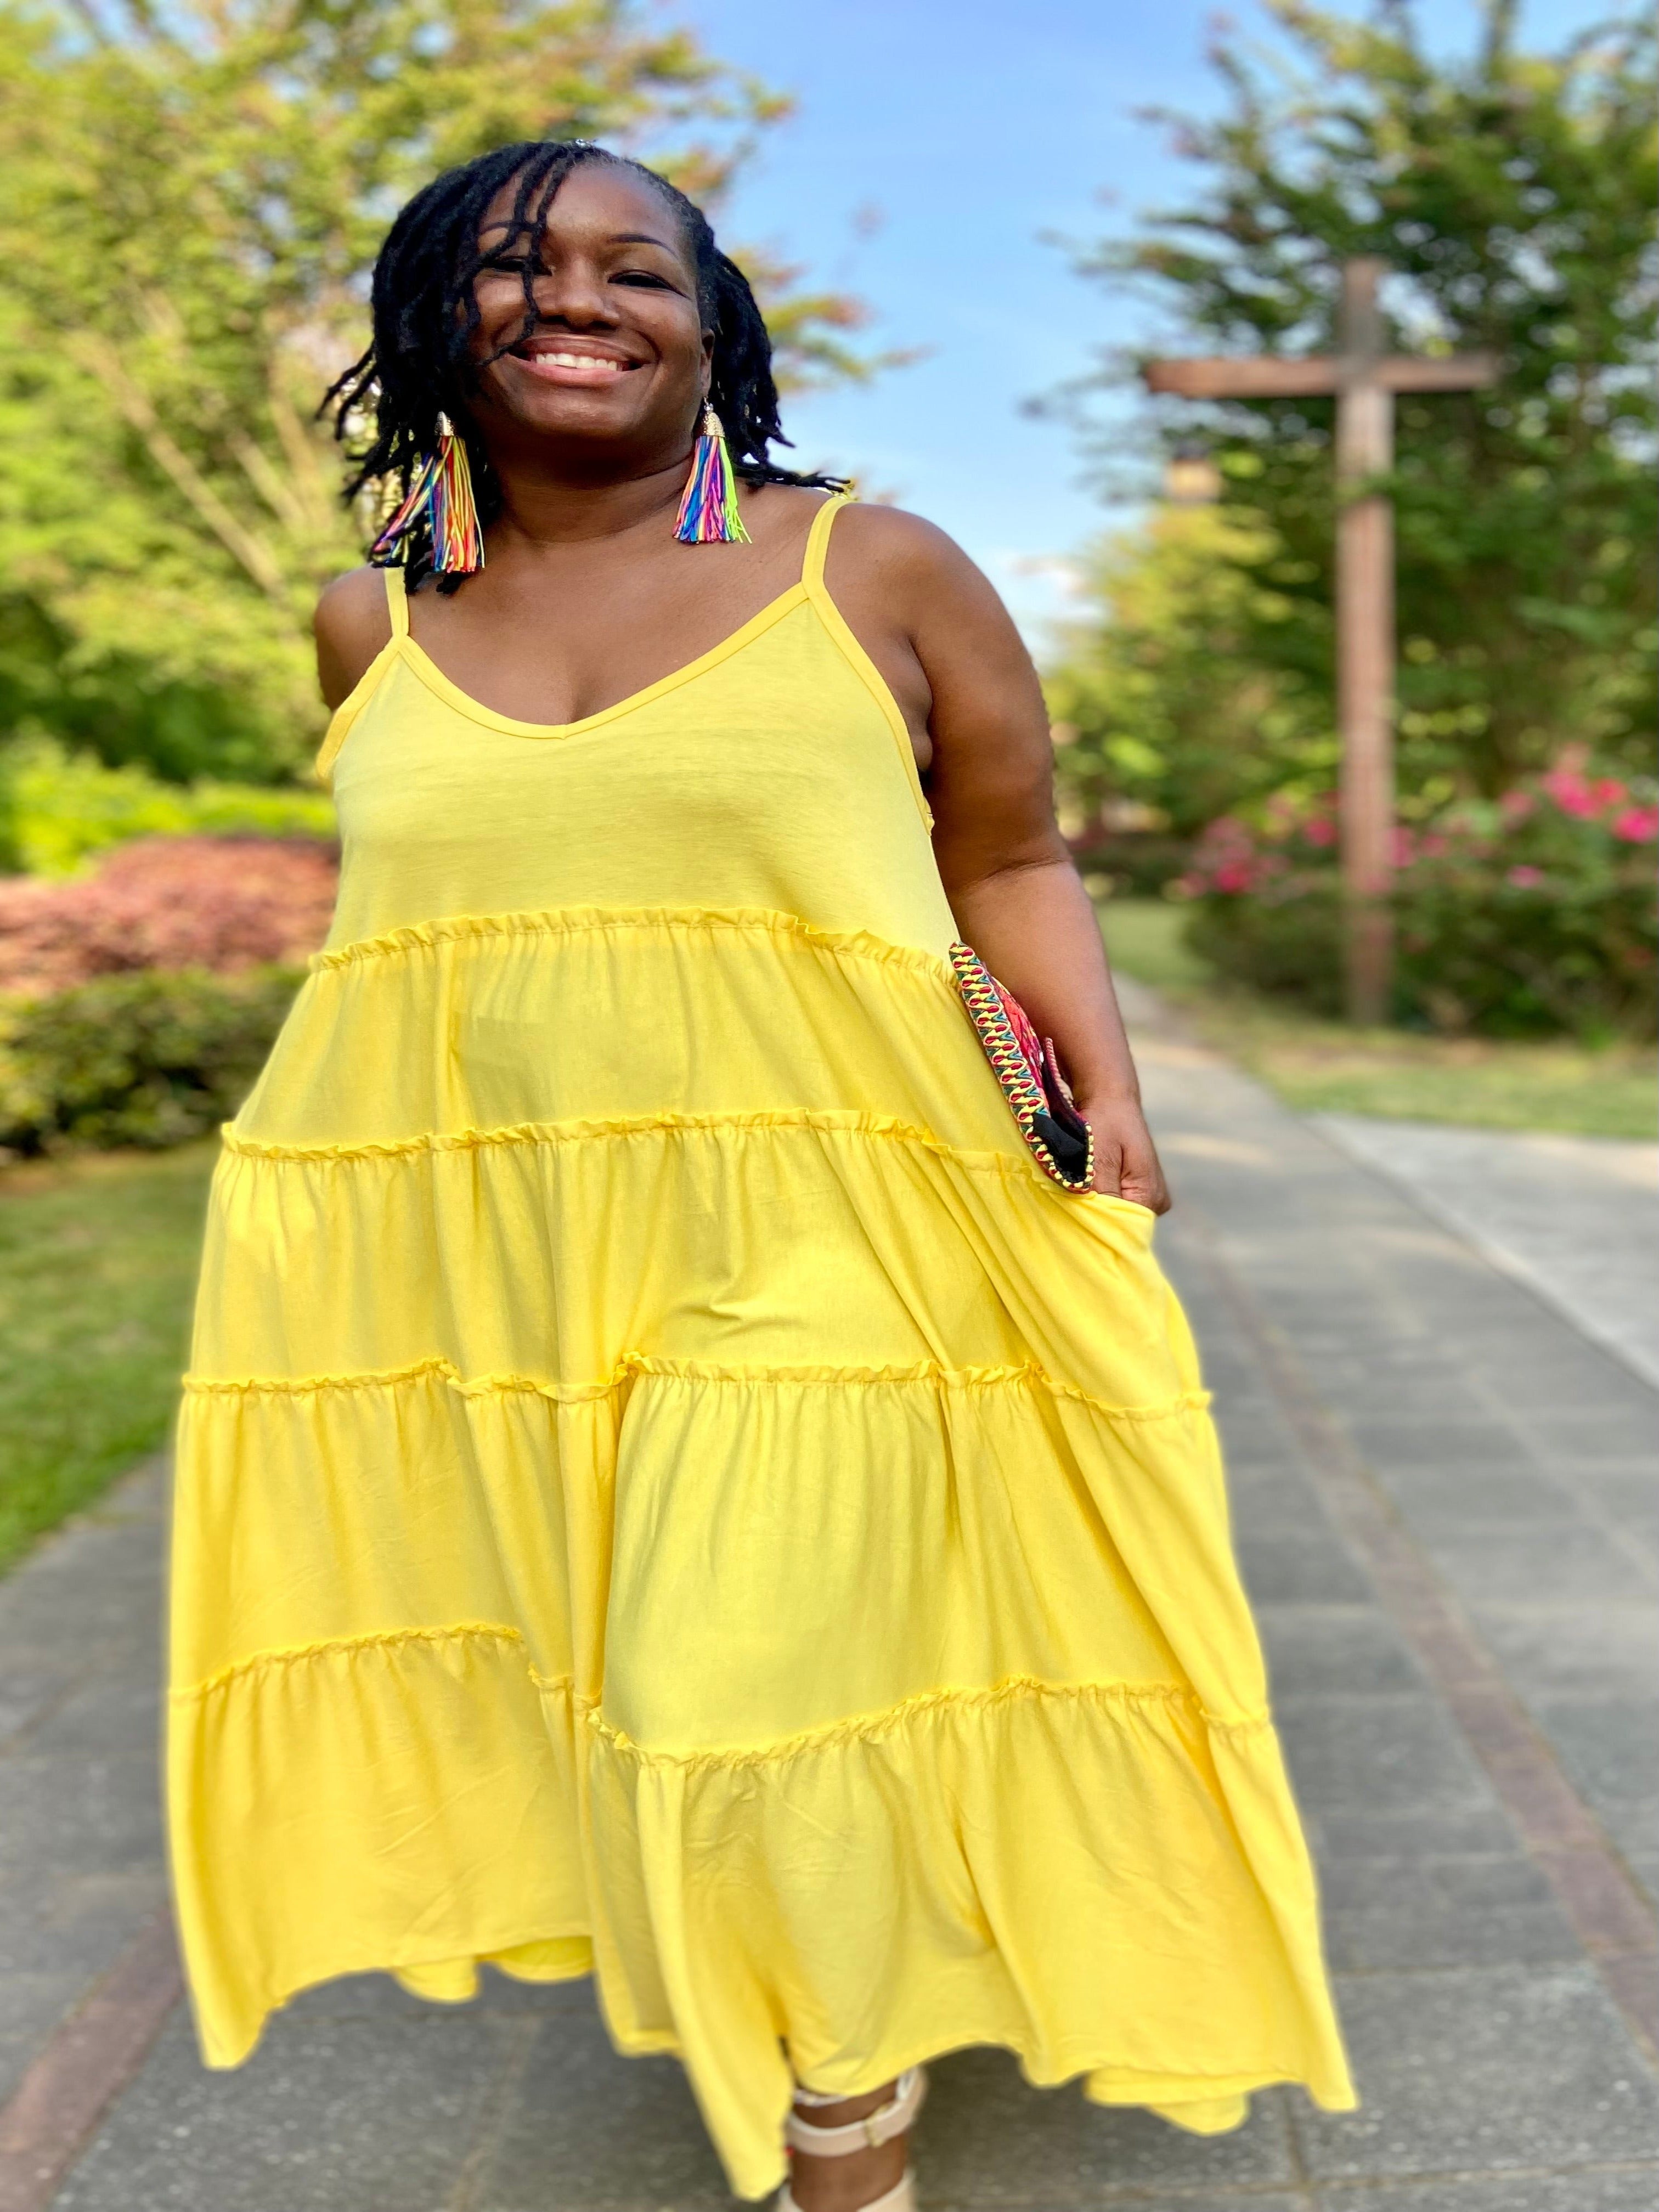 Summer Wind: Yellow Cocktail Dress for a Summer Wedding